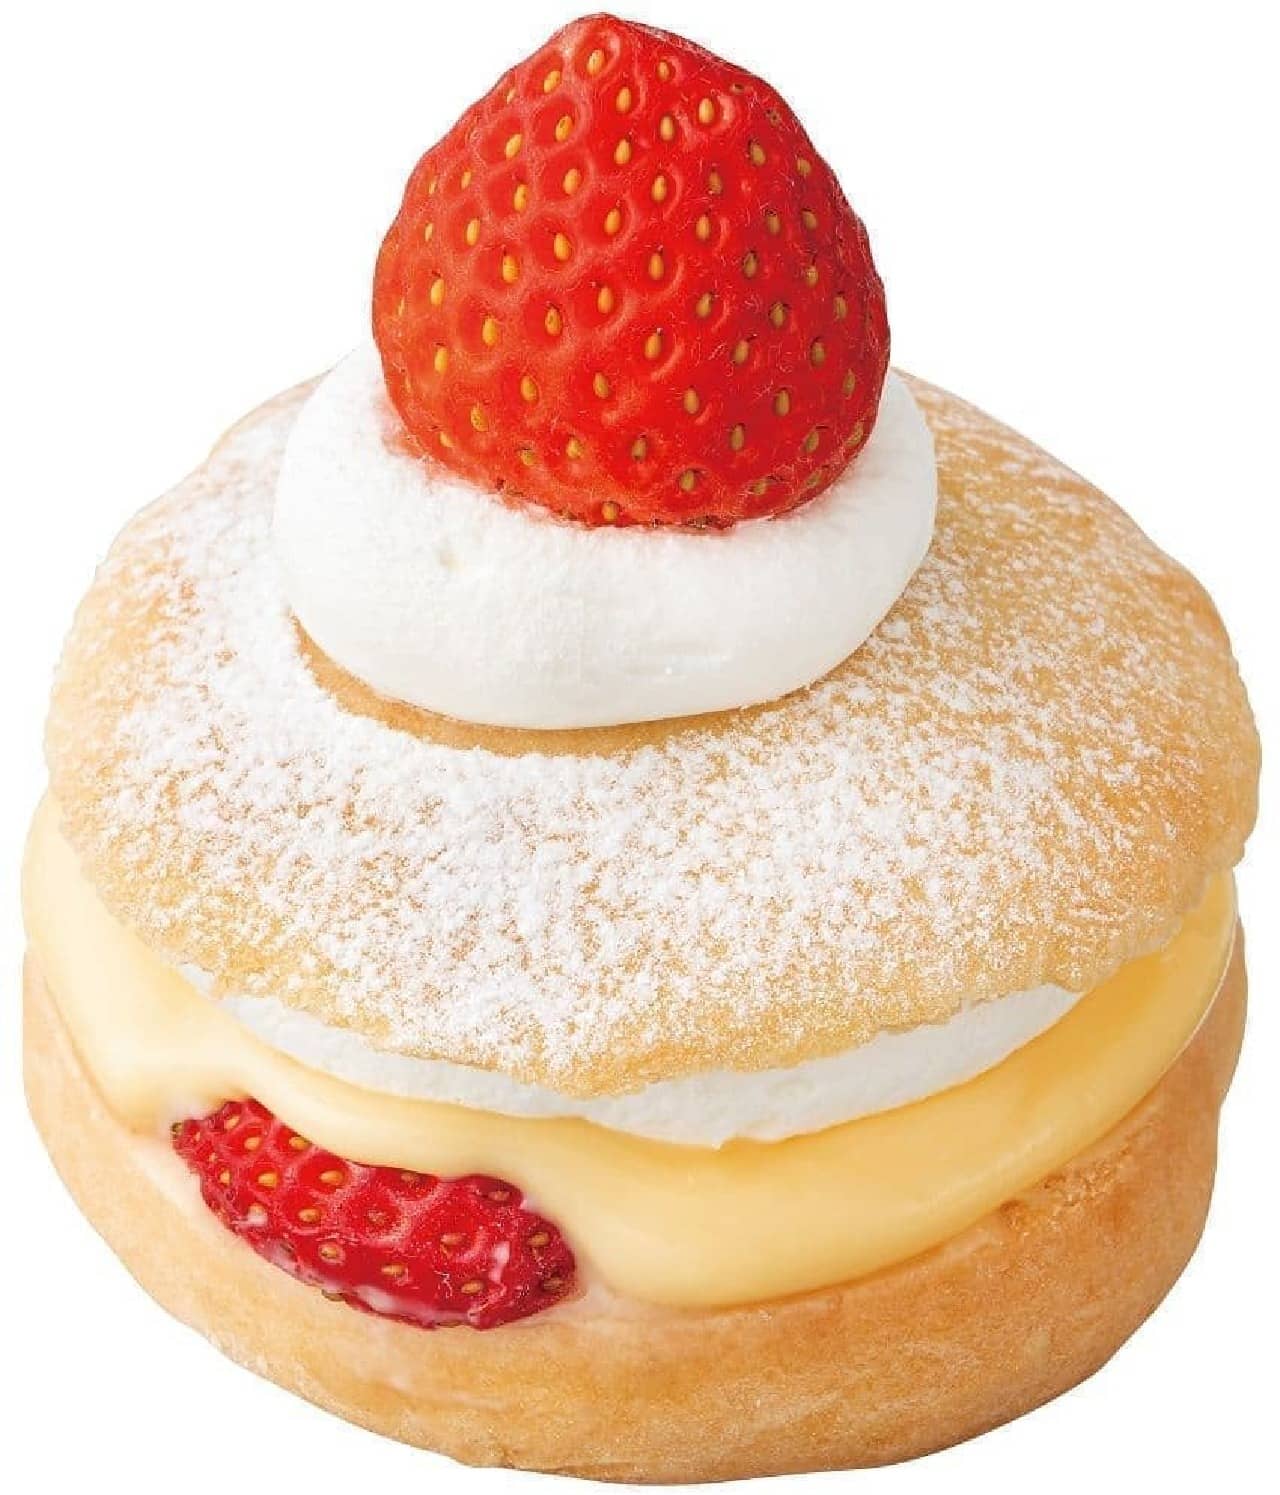 Fujiya pastry shop "Founding Festival American Shortcake"